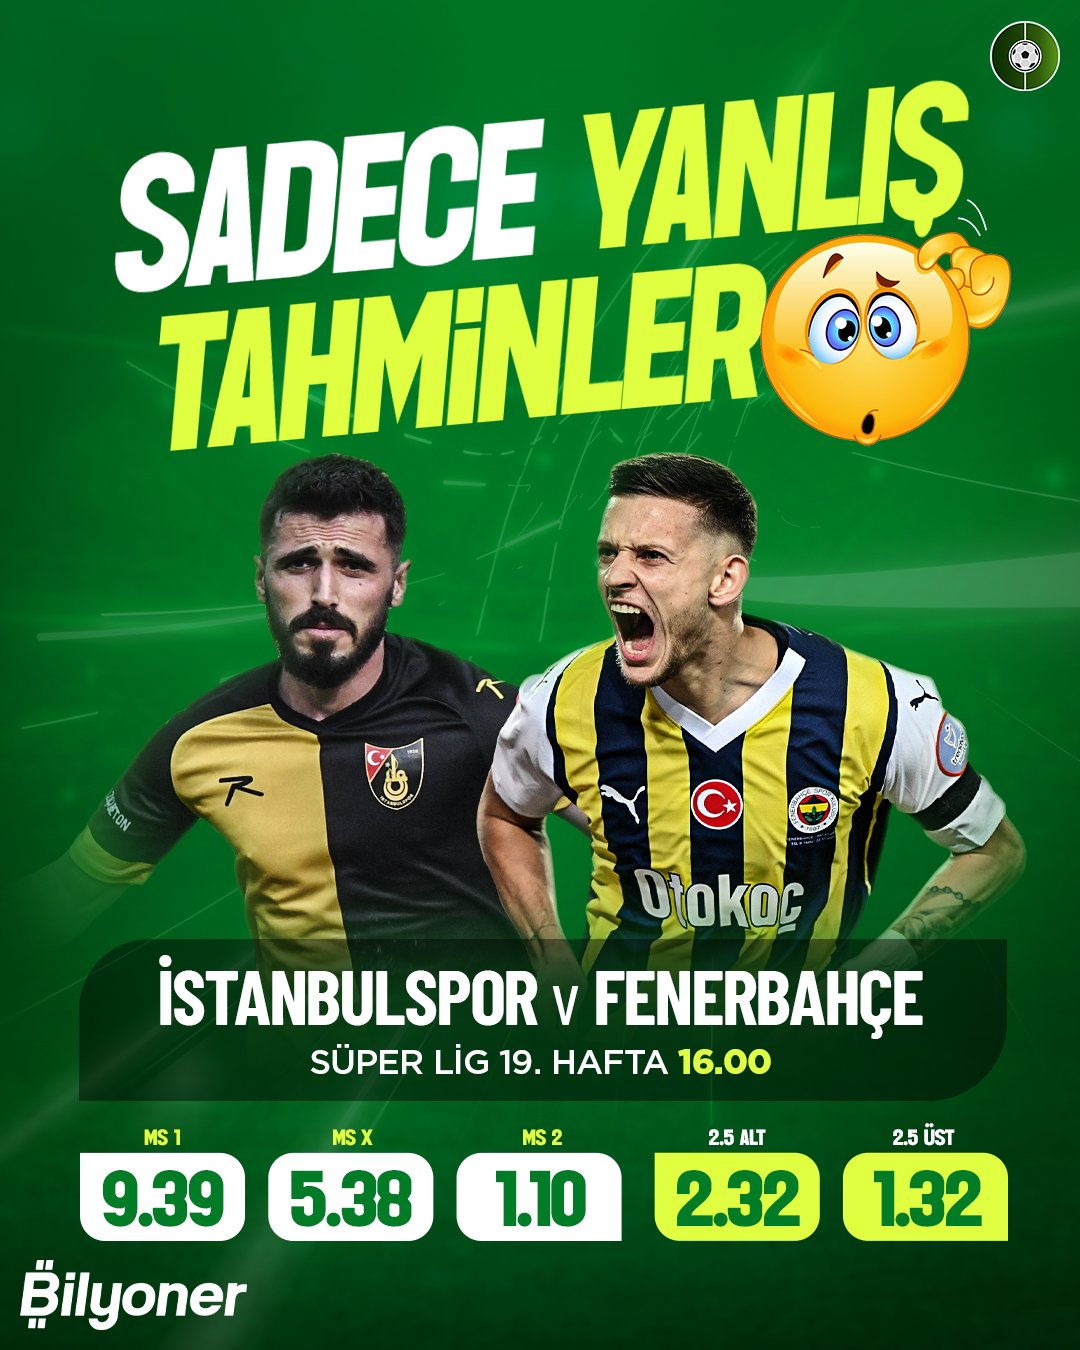 The Fenerbahçe vs Galatasaray Rivalry: A Battle of Istanbul